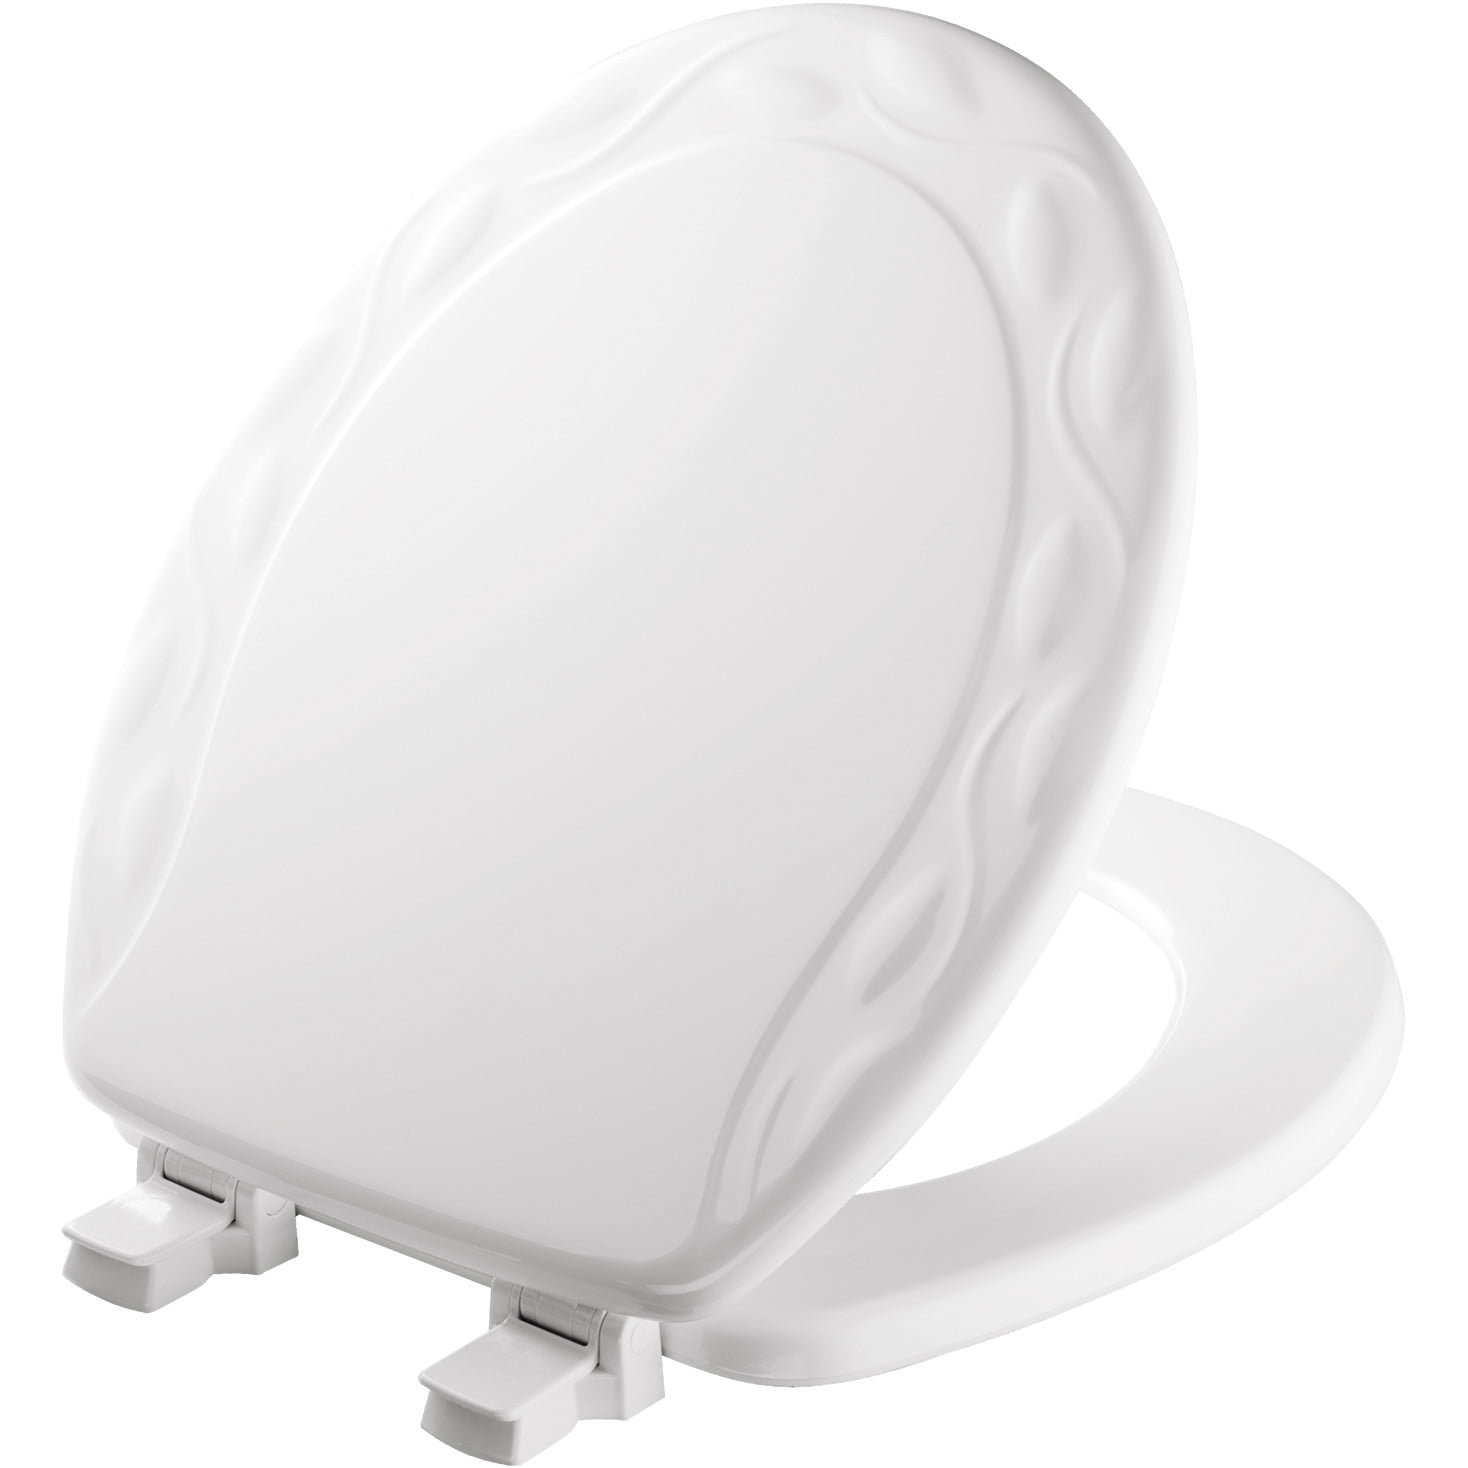 Bemis 500ec 390 Lift-off Round Closed Front Toilet Seat Cotton White for sale online 